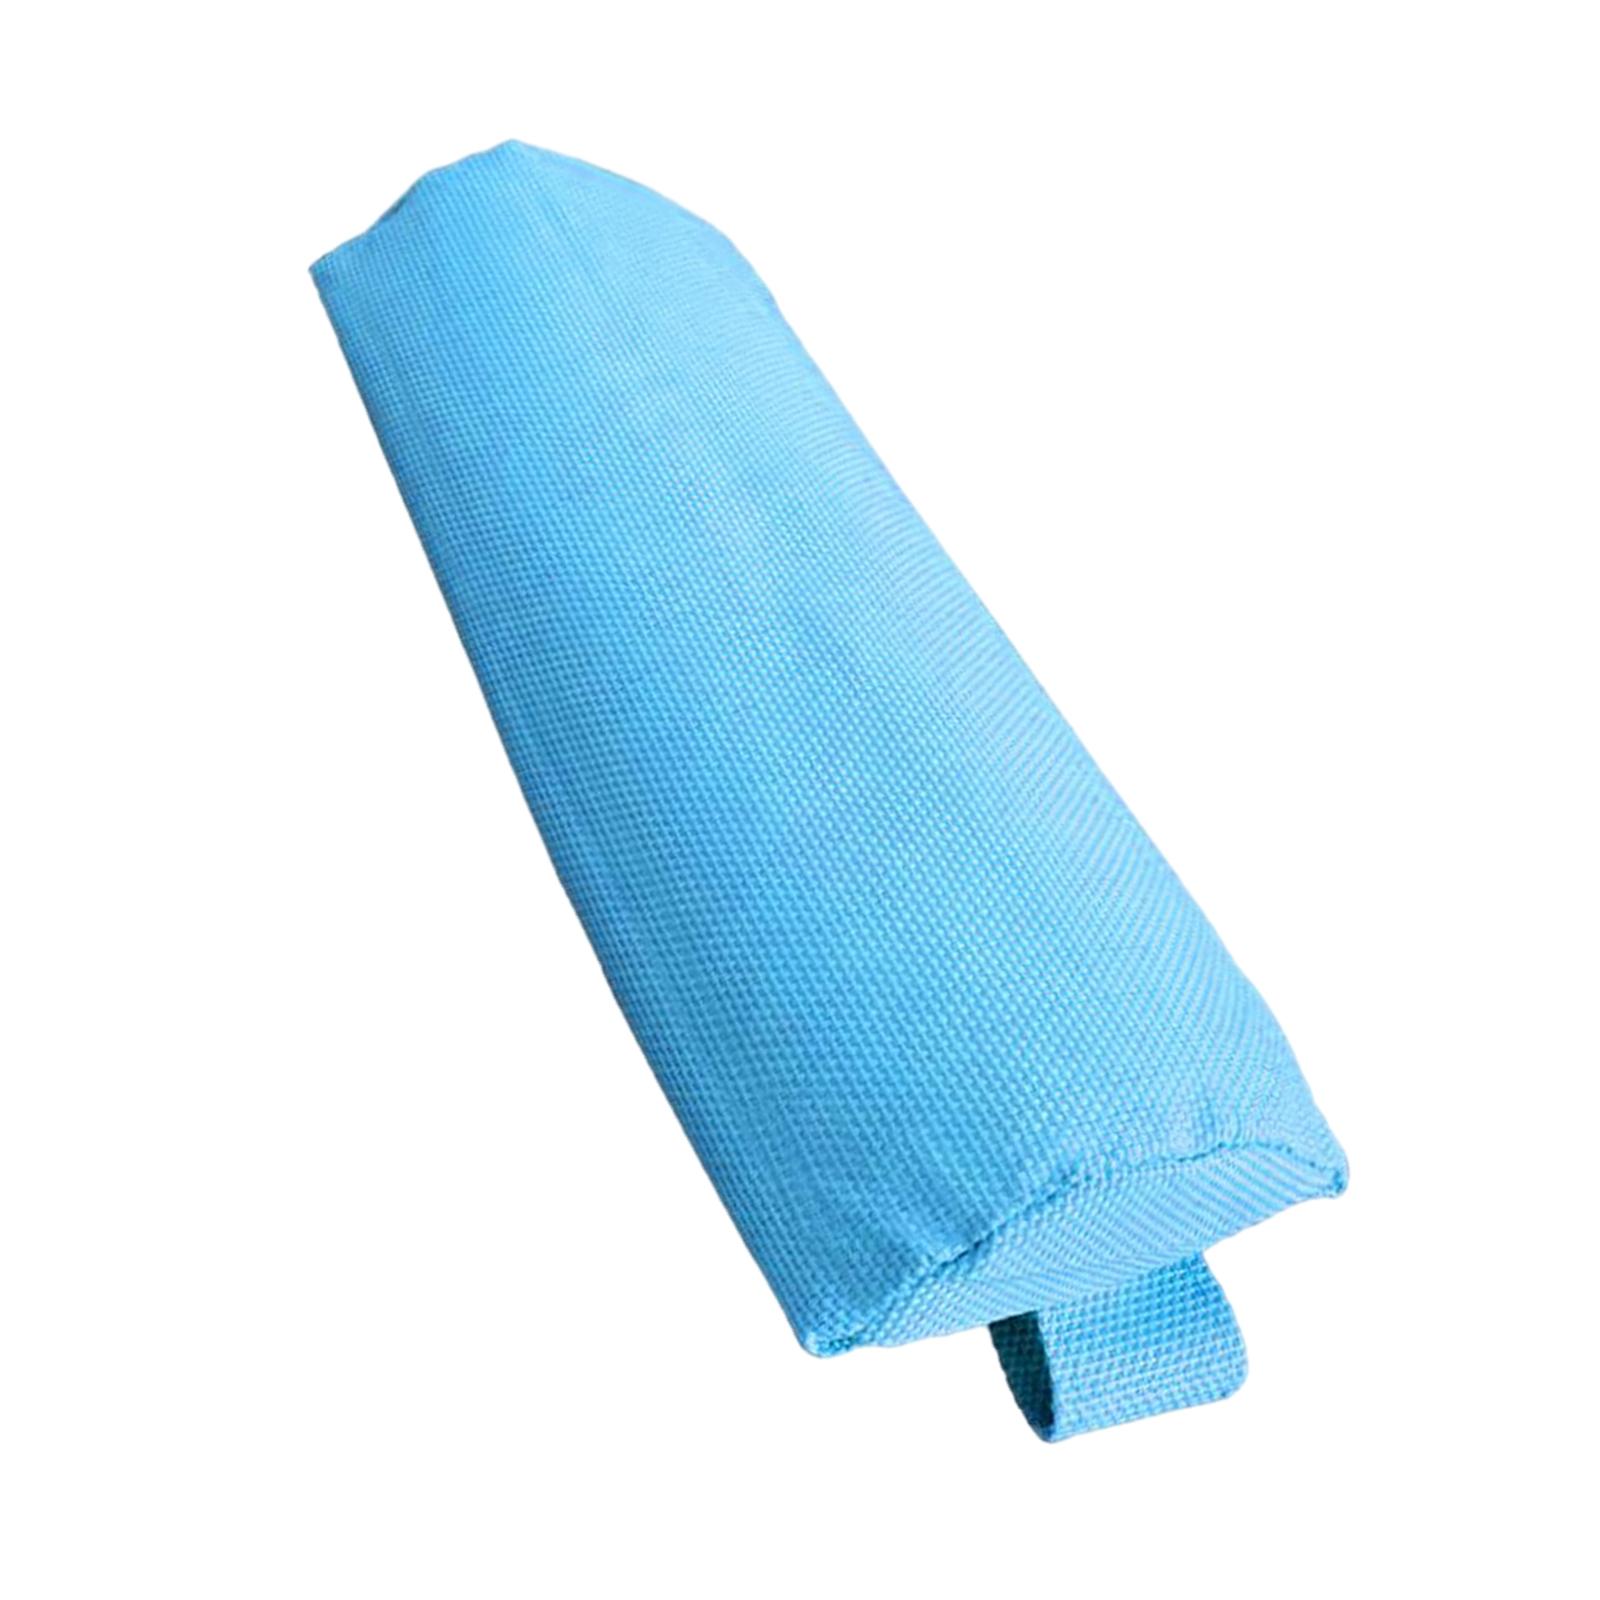 Comfortable Head Cushion Pillow for Folding Chair Beach Patio Chair Headrest blue - image 4 of 6